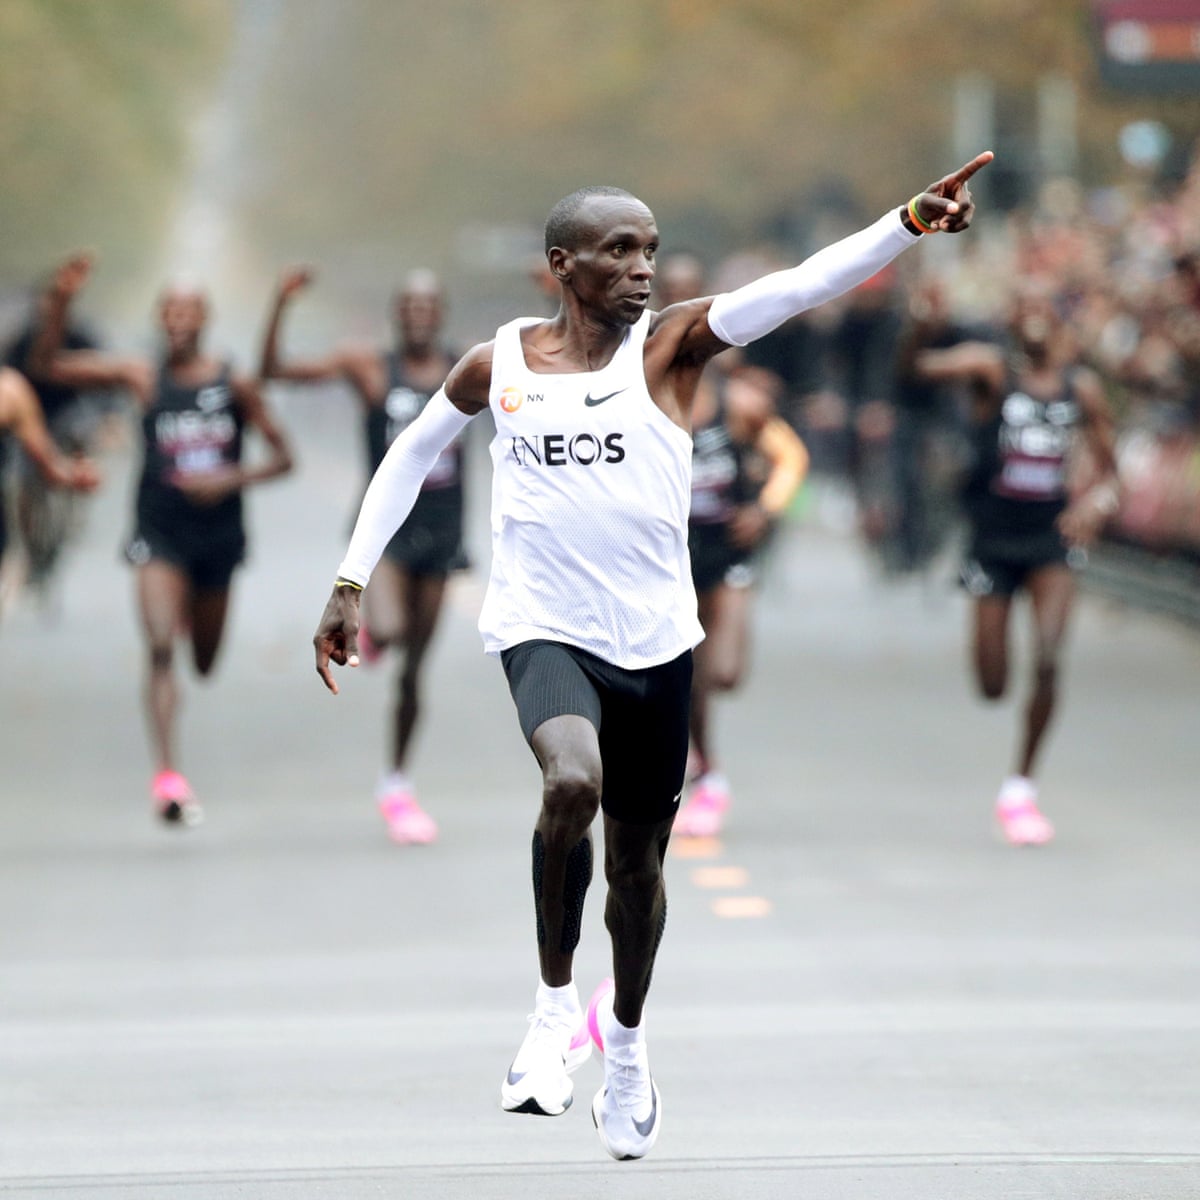 Eliud Kipchoge denies platform Nike shoes violate the spirit of sport |  London Marathon | The Guardian